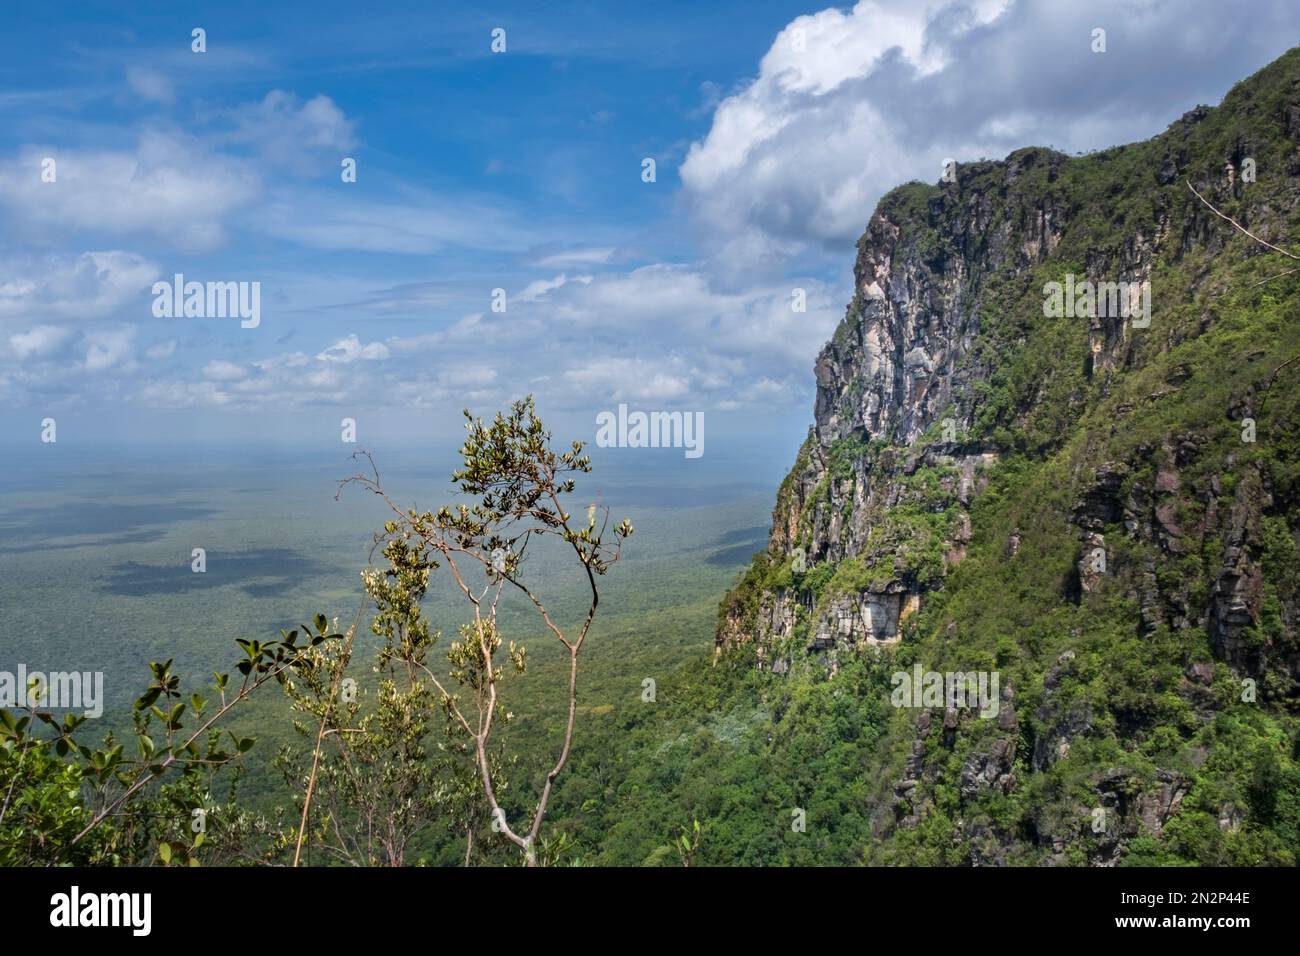 Araca mountain, a tepui in the remote Serra do Araca State Park, Guiana Shield, Amazonas, Brazil Stock Photo